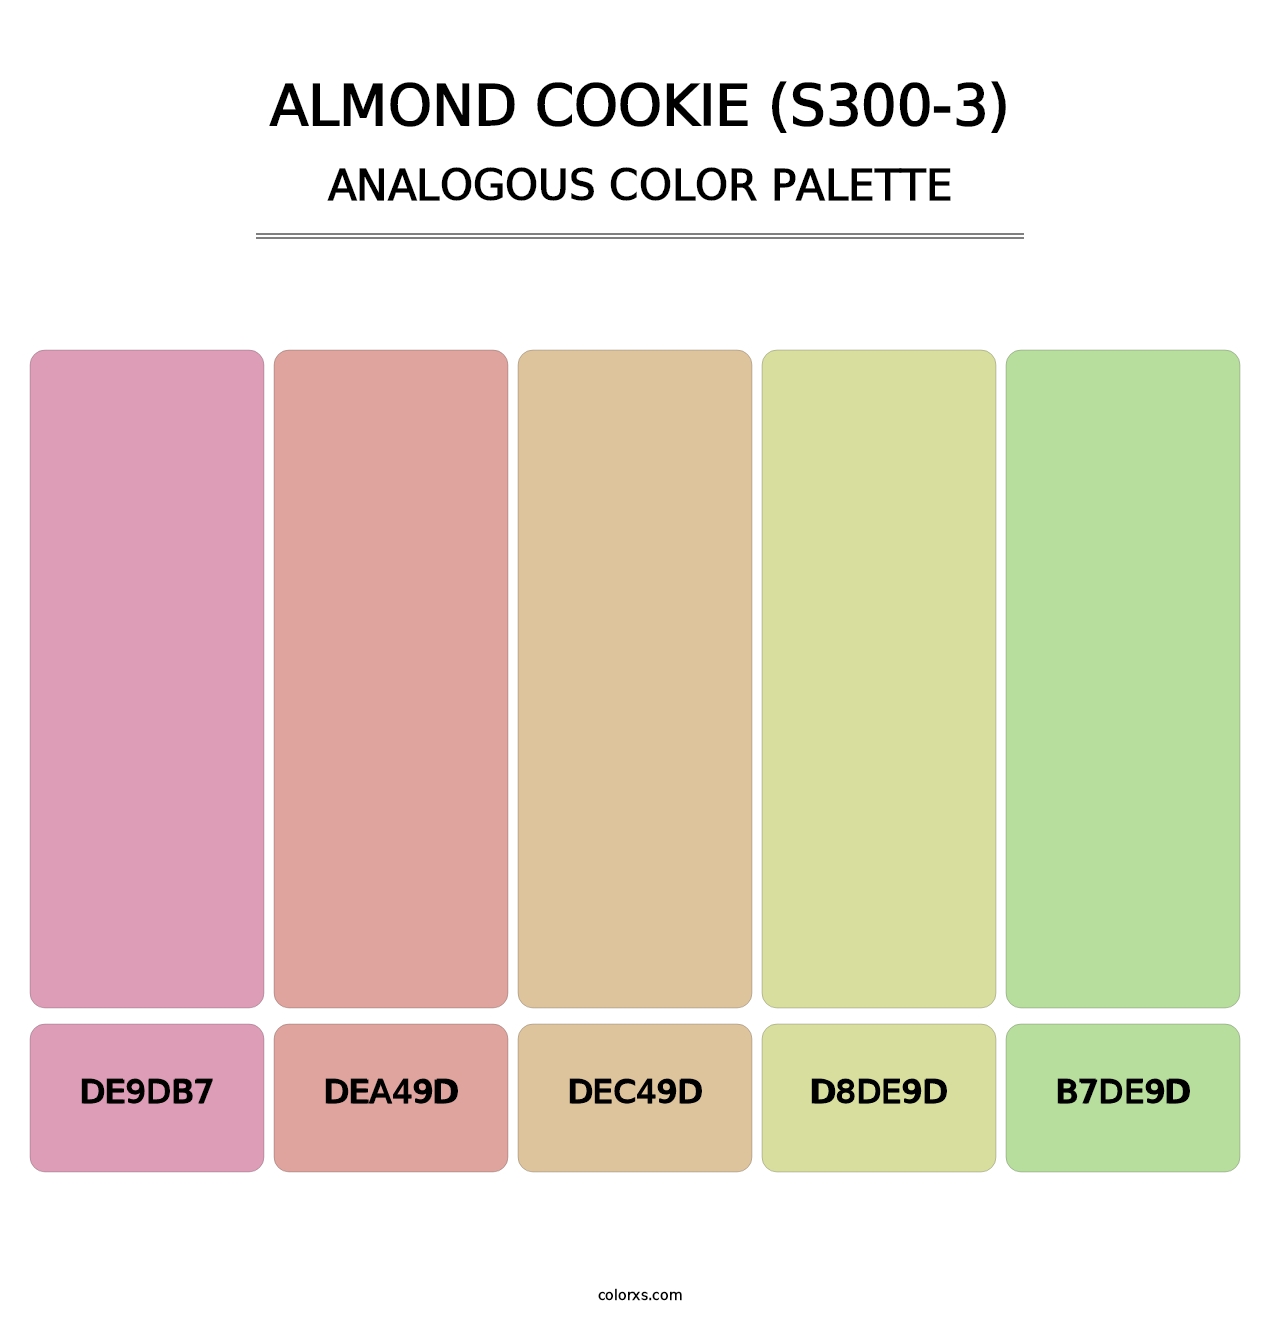 Almond Cookie (S300-3) - Analogous Color Palette